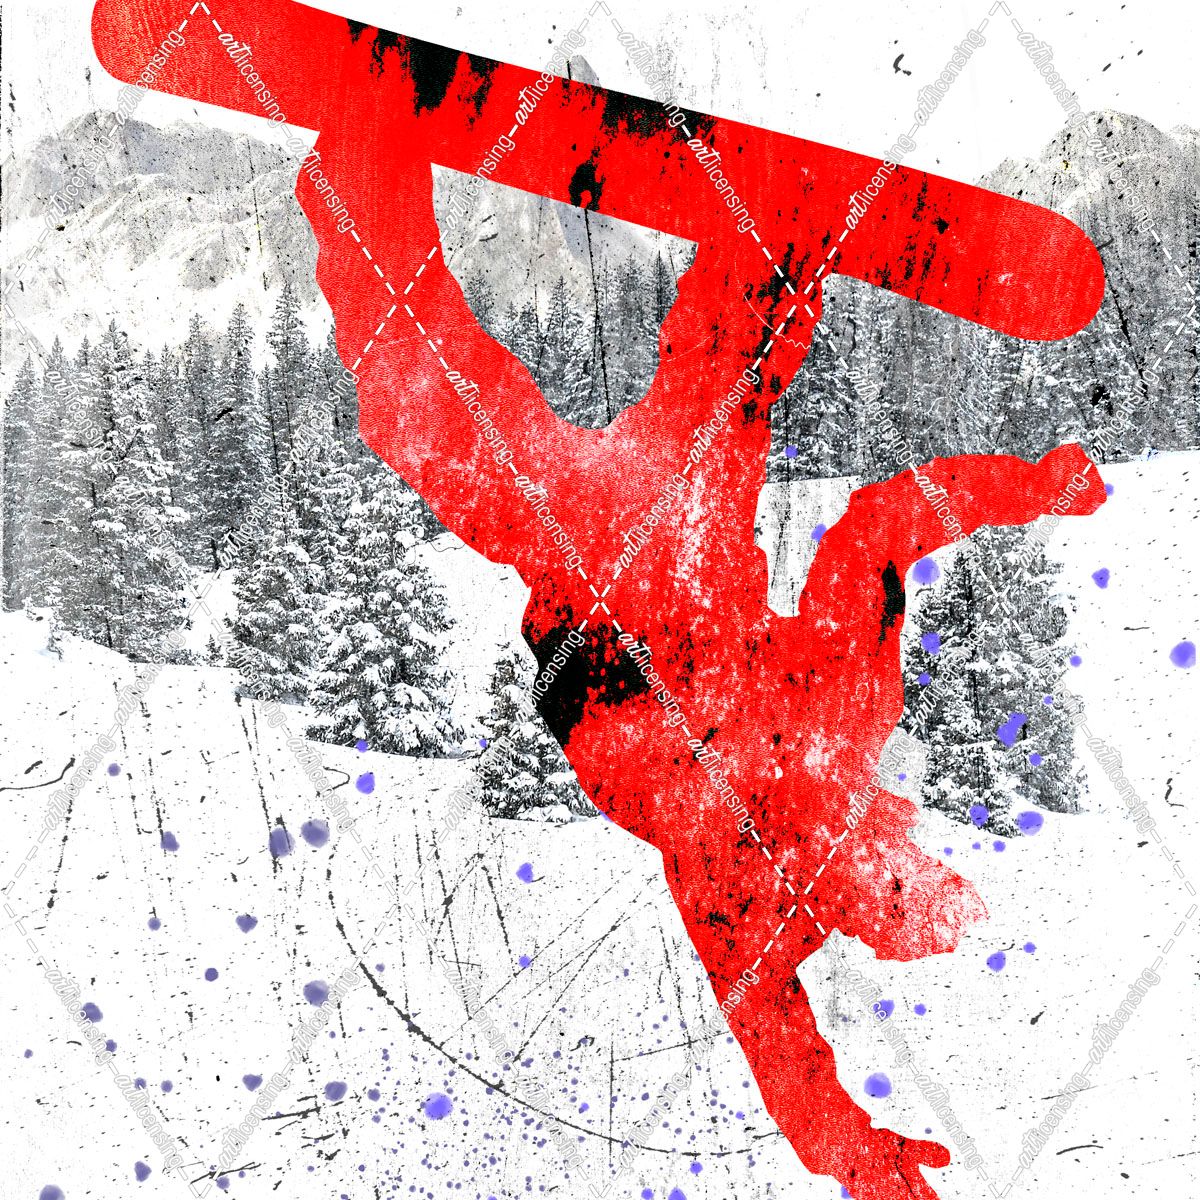 Extreme Snowboarder 03